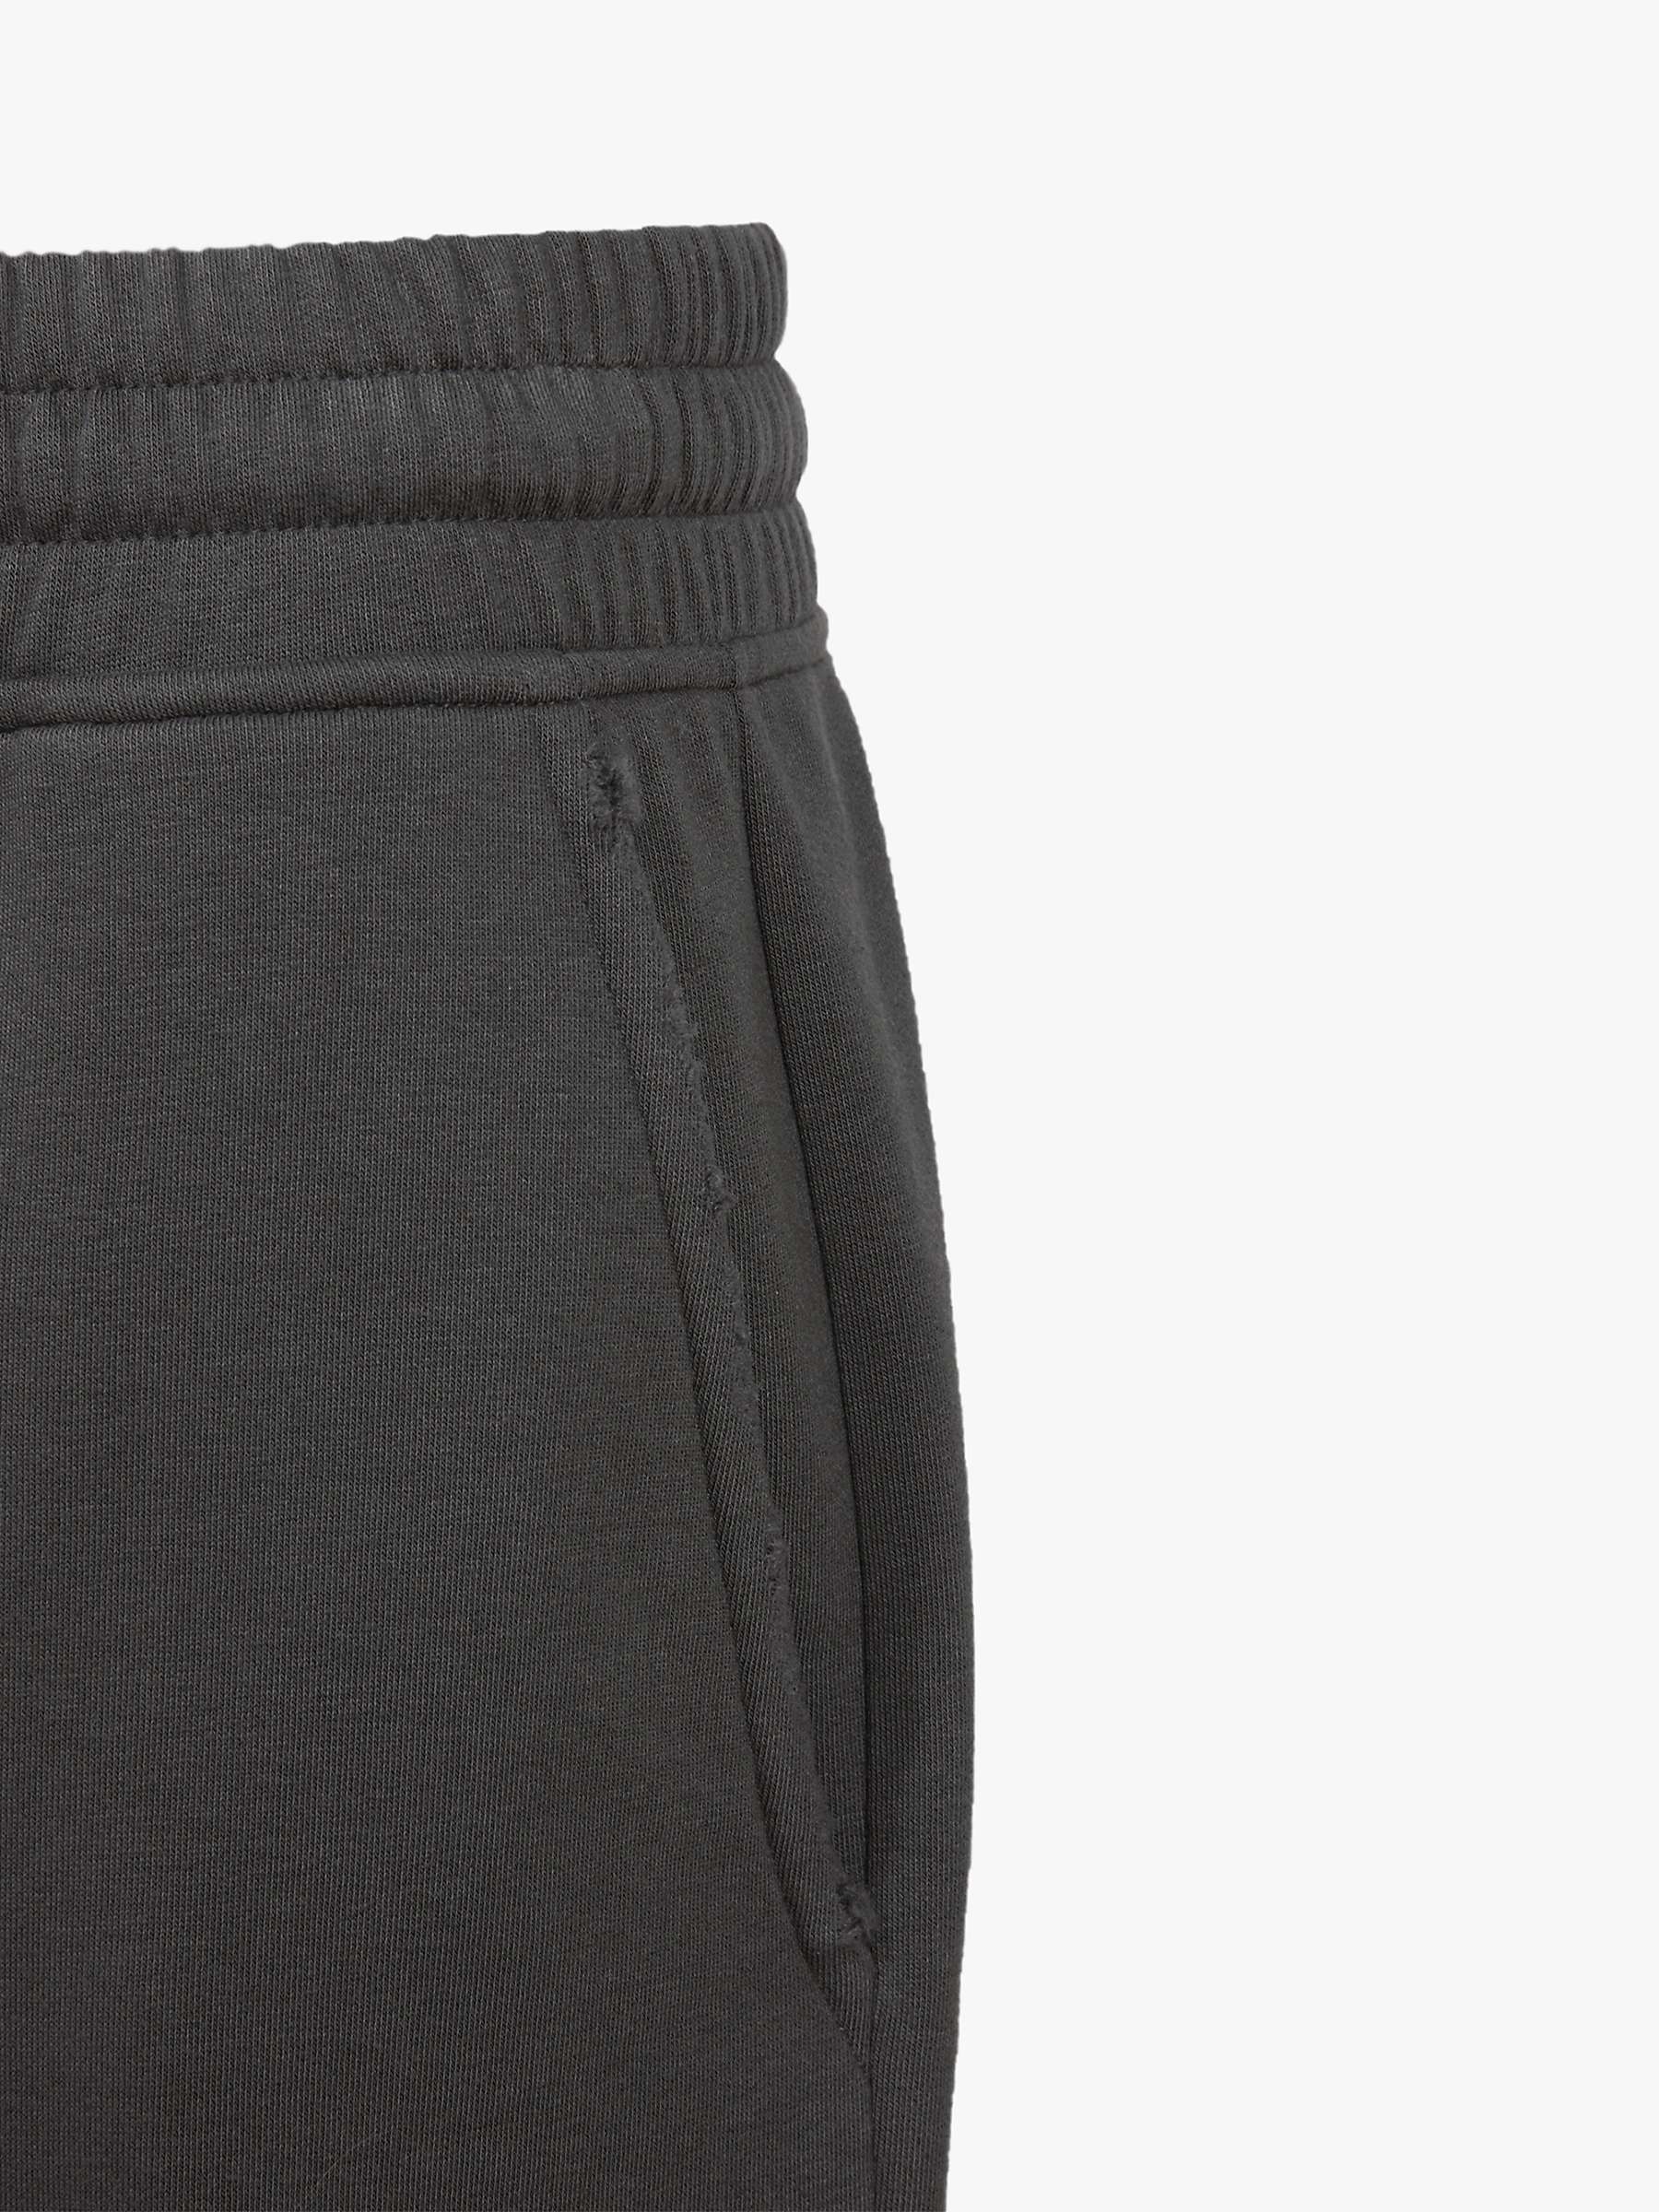 Buy AllSaints Helix Sweat Shorts Online at johnlewis.com